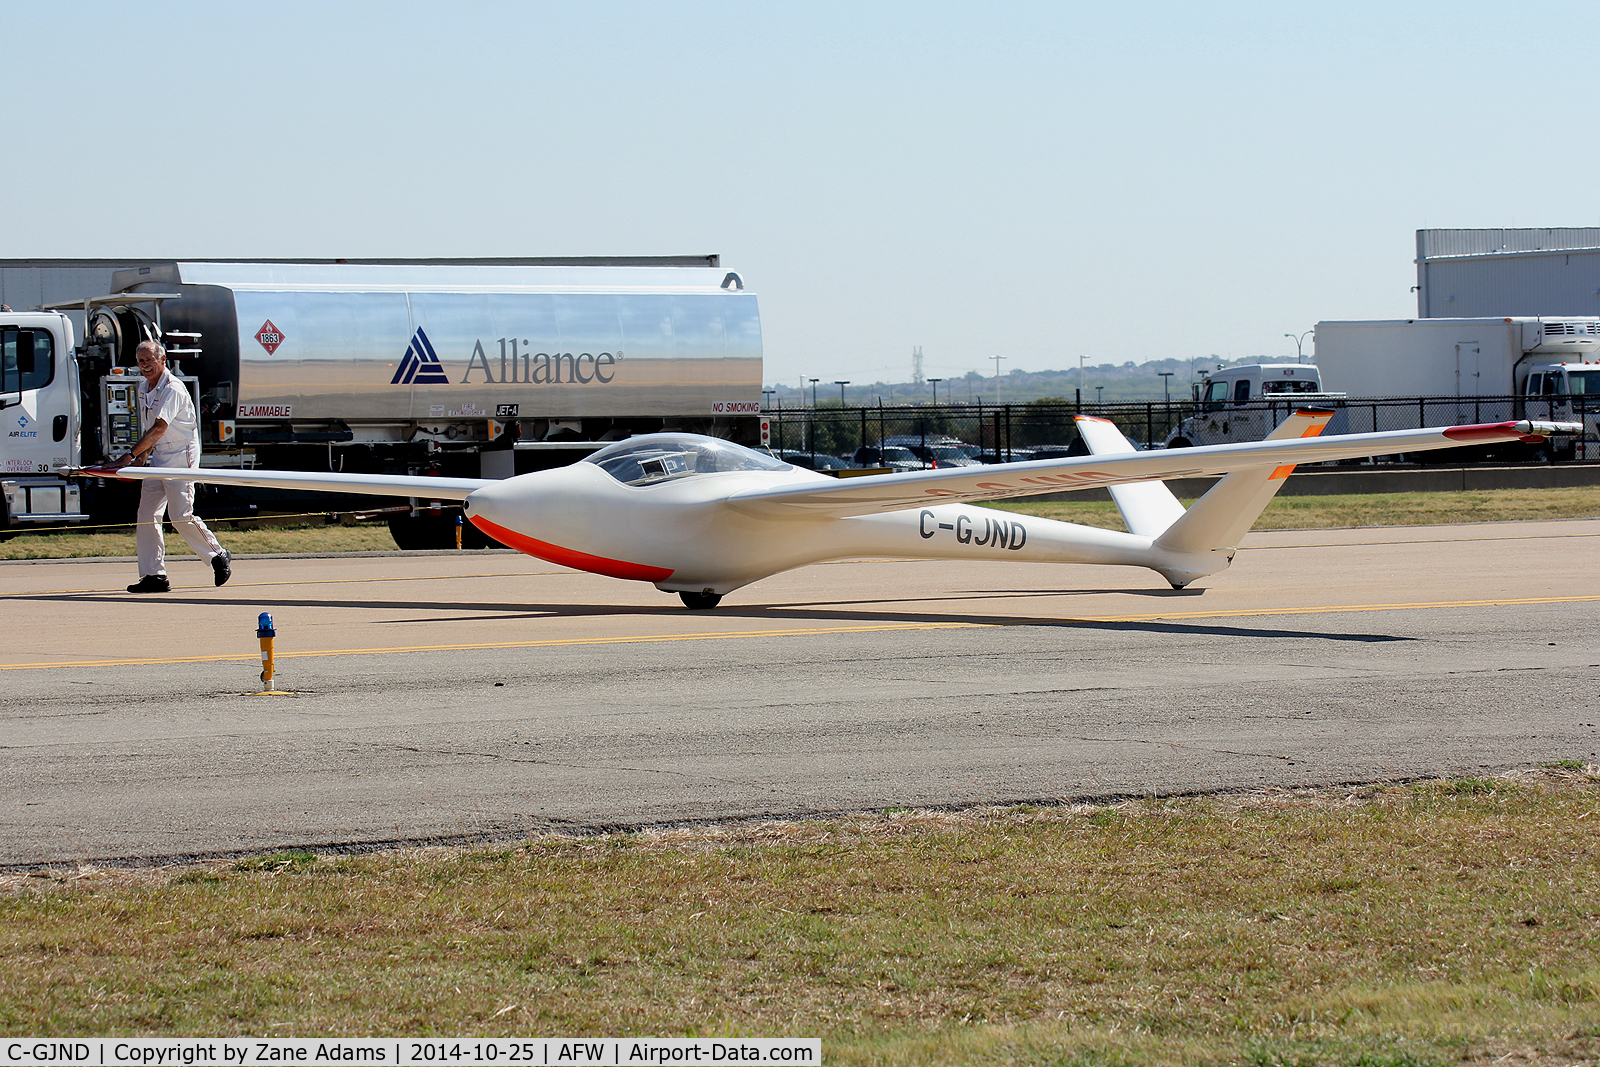 C-GJND, 1973 Start & Flug H101 Salto C/N 23, At the 2014 Alliance Airshow - Fort Worth, TX